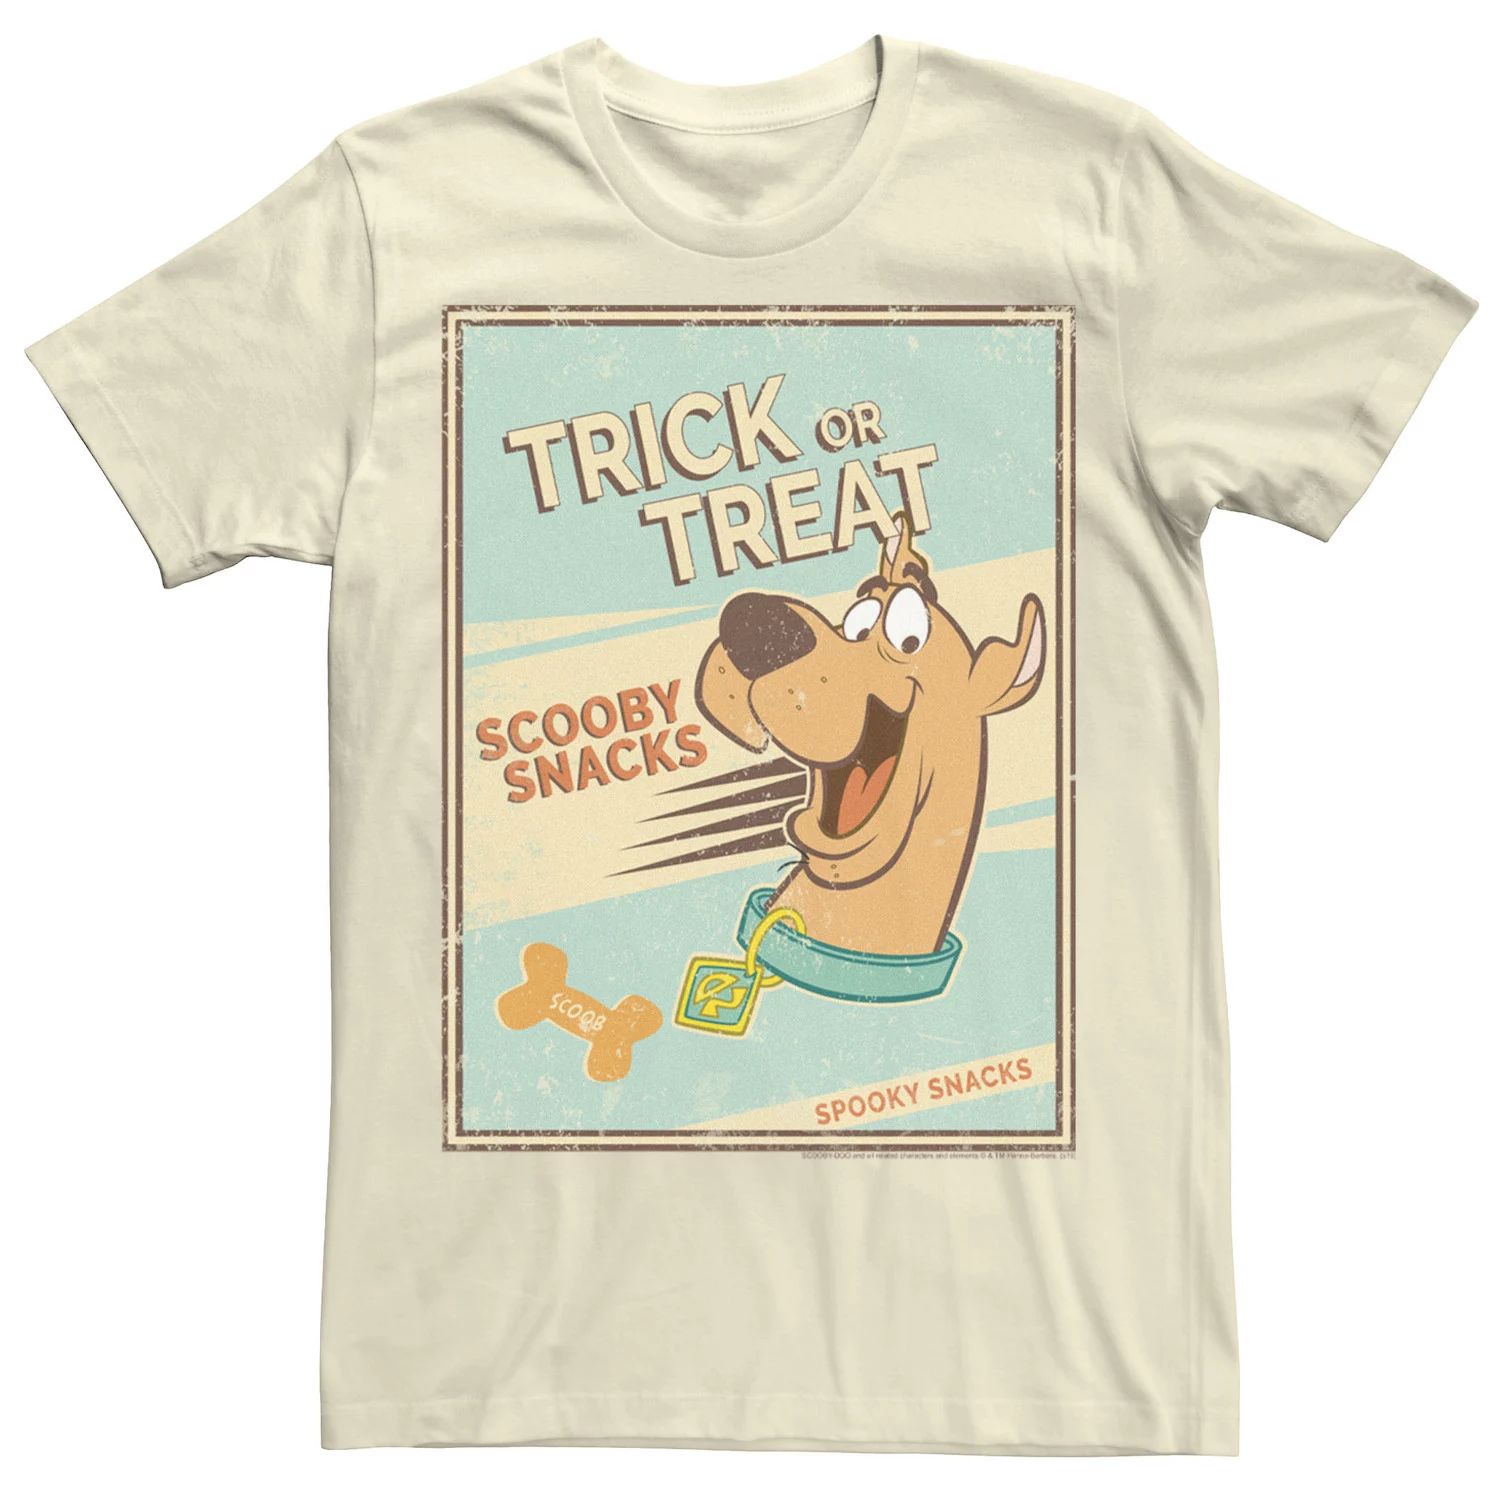 Мужская футболка с плакатом Scooby-Doo Trick or Treat Scooby Snacks Spooky Snacks Licensed Character цена и фото